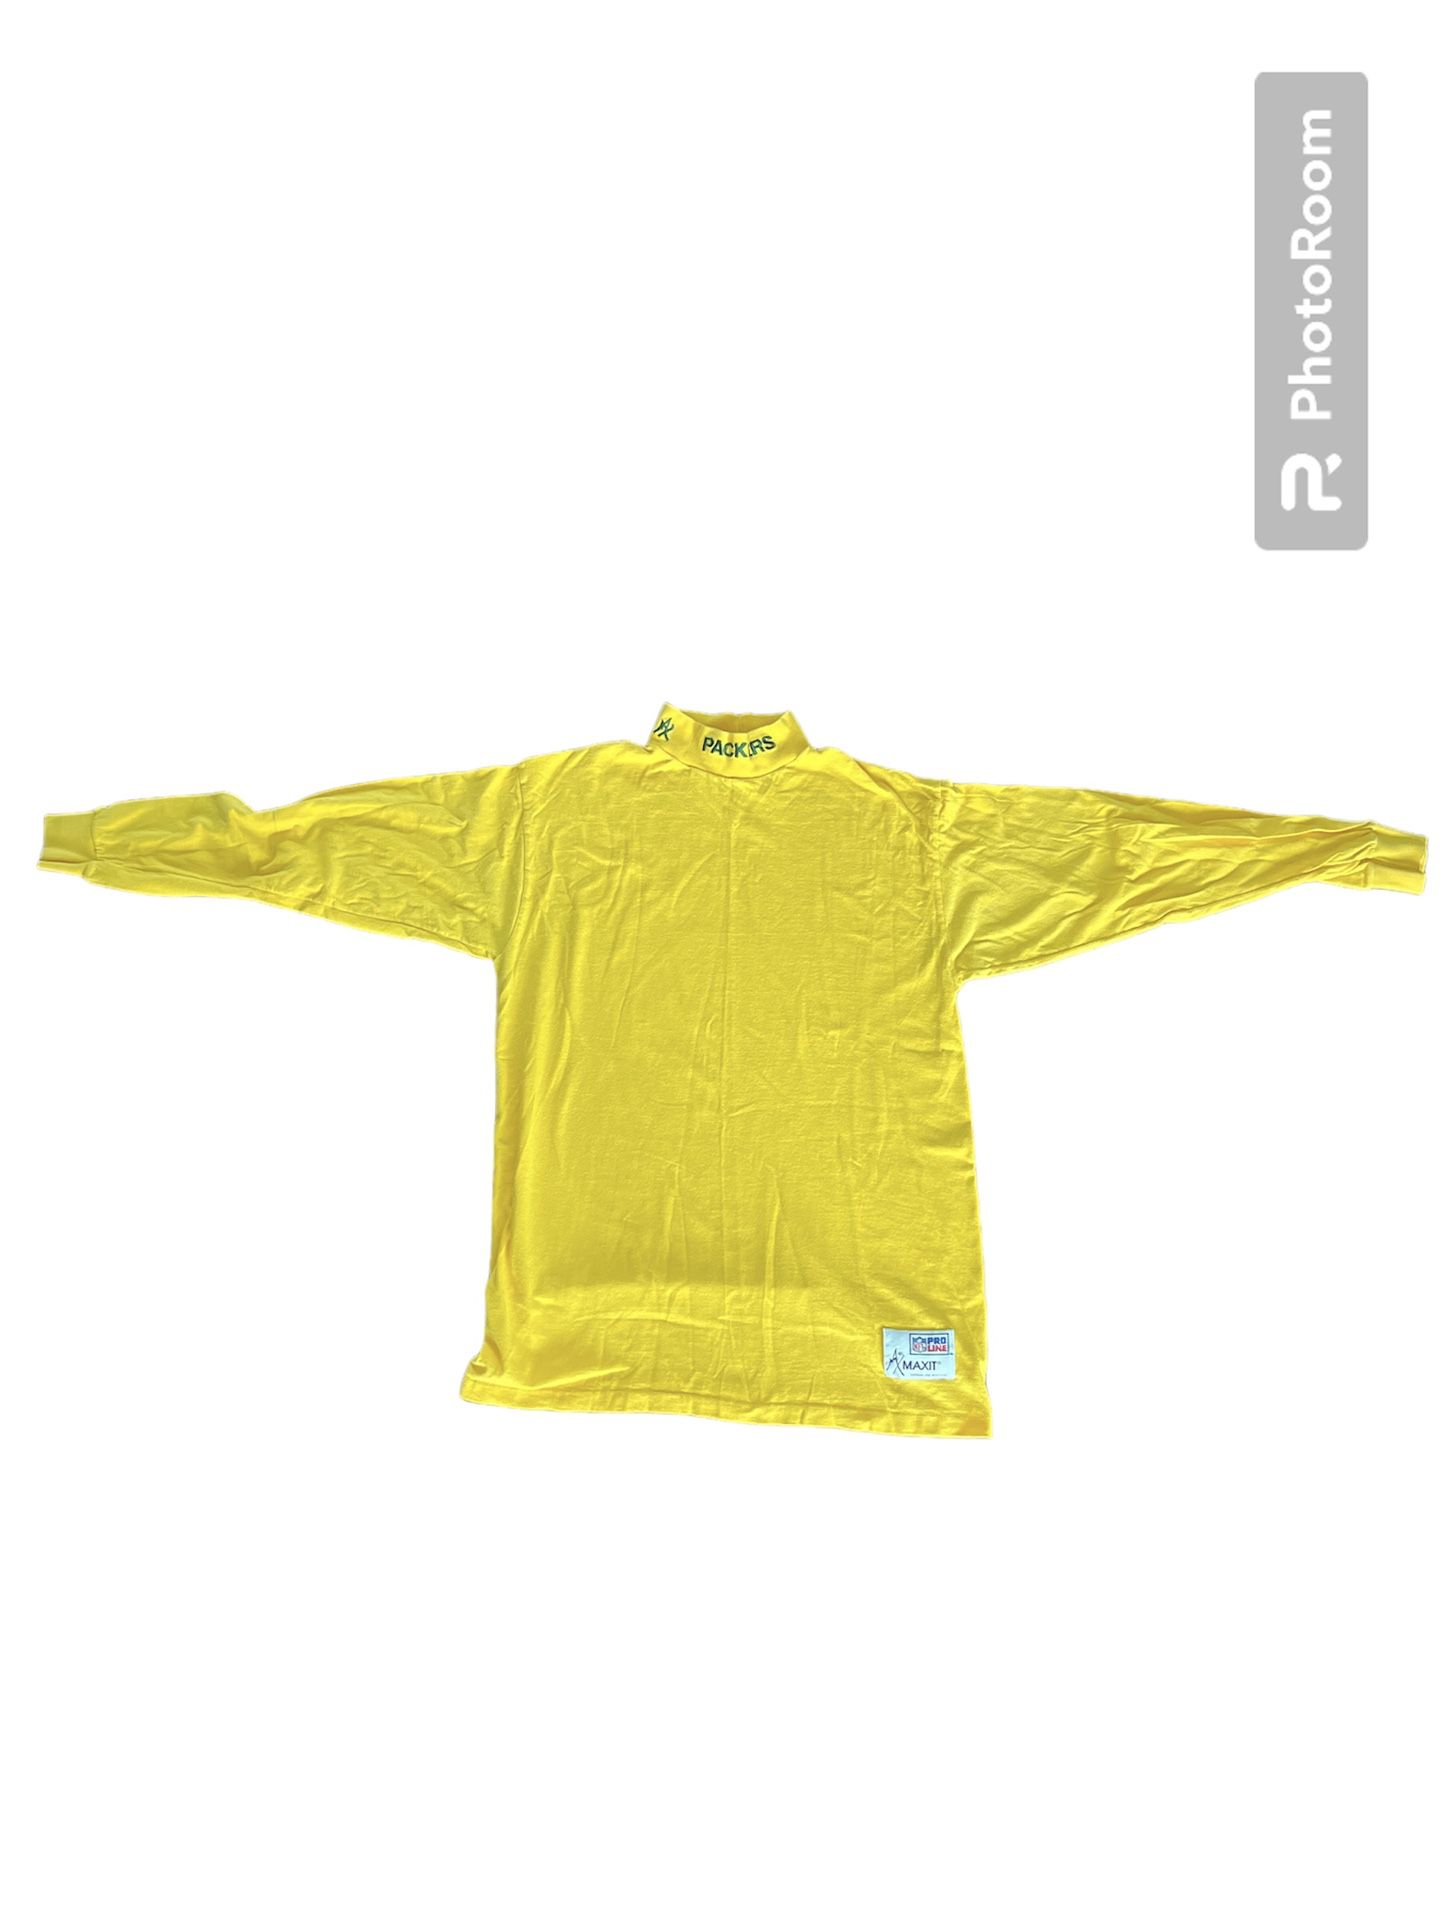 Vintage Green Bay Packers Shirt Mens Medium Yellow NFL Proline Maxit Thermal